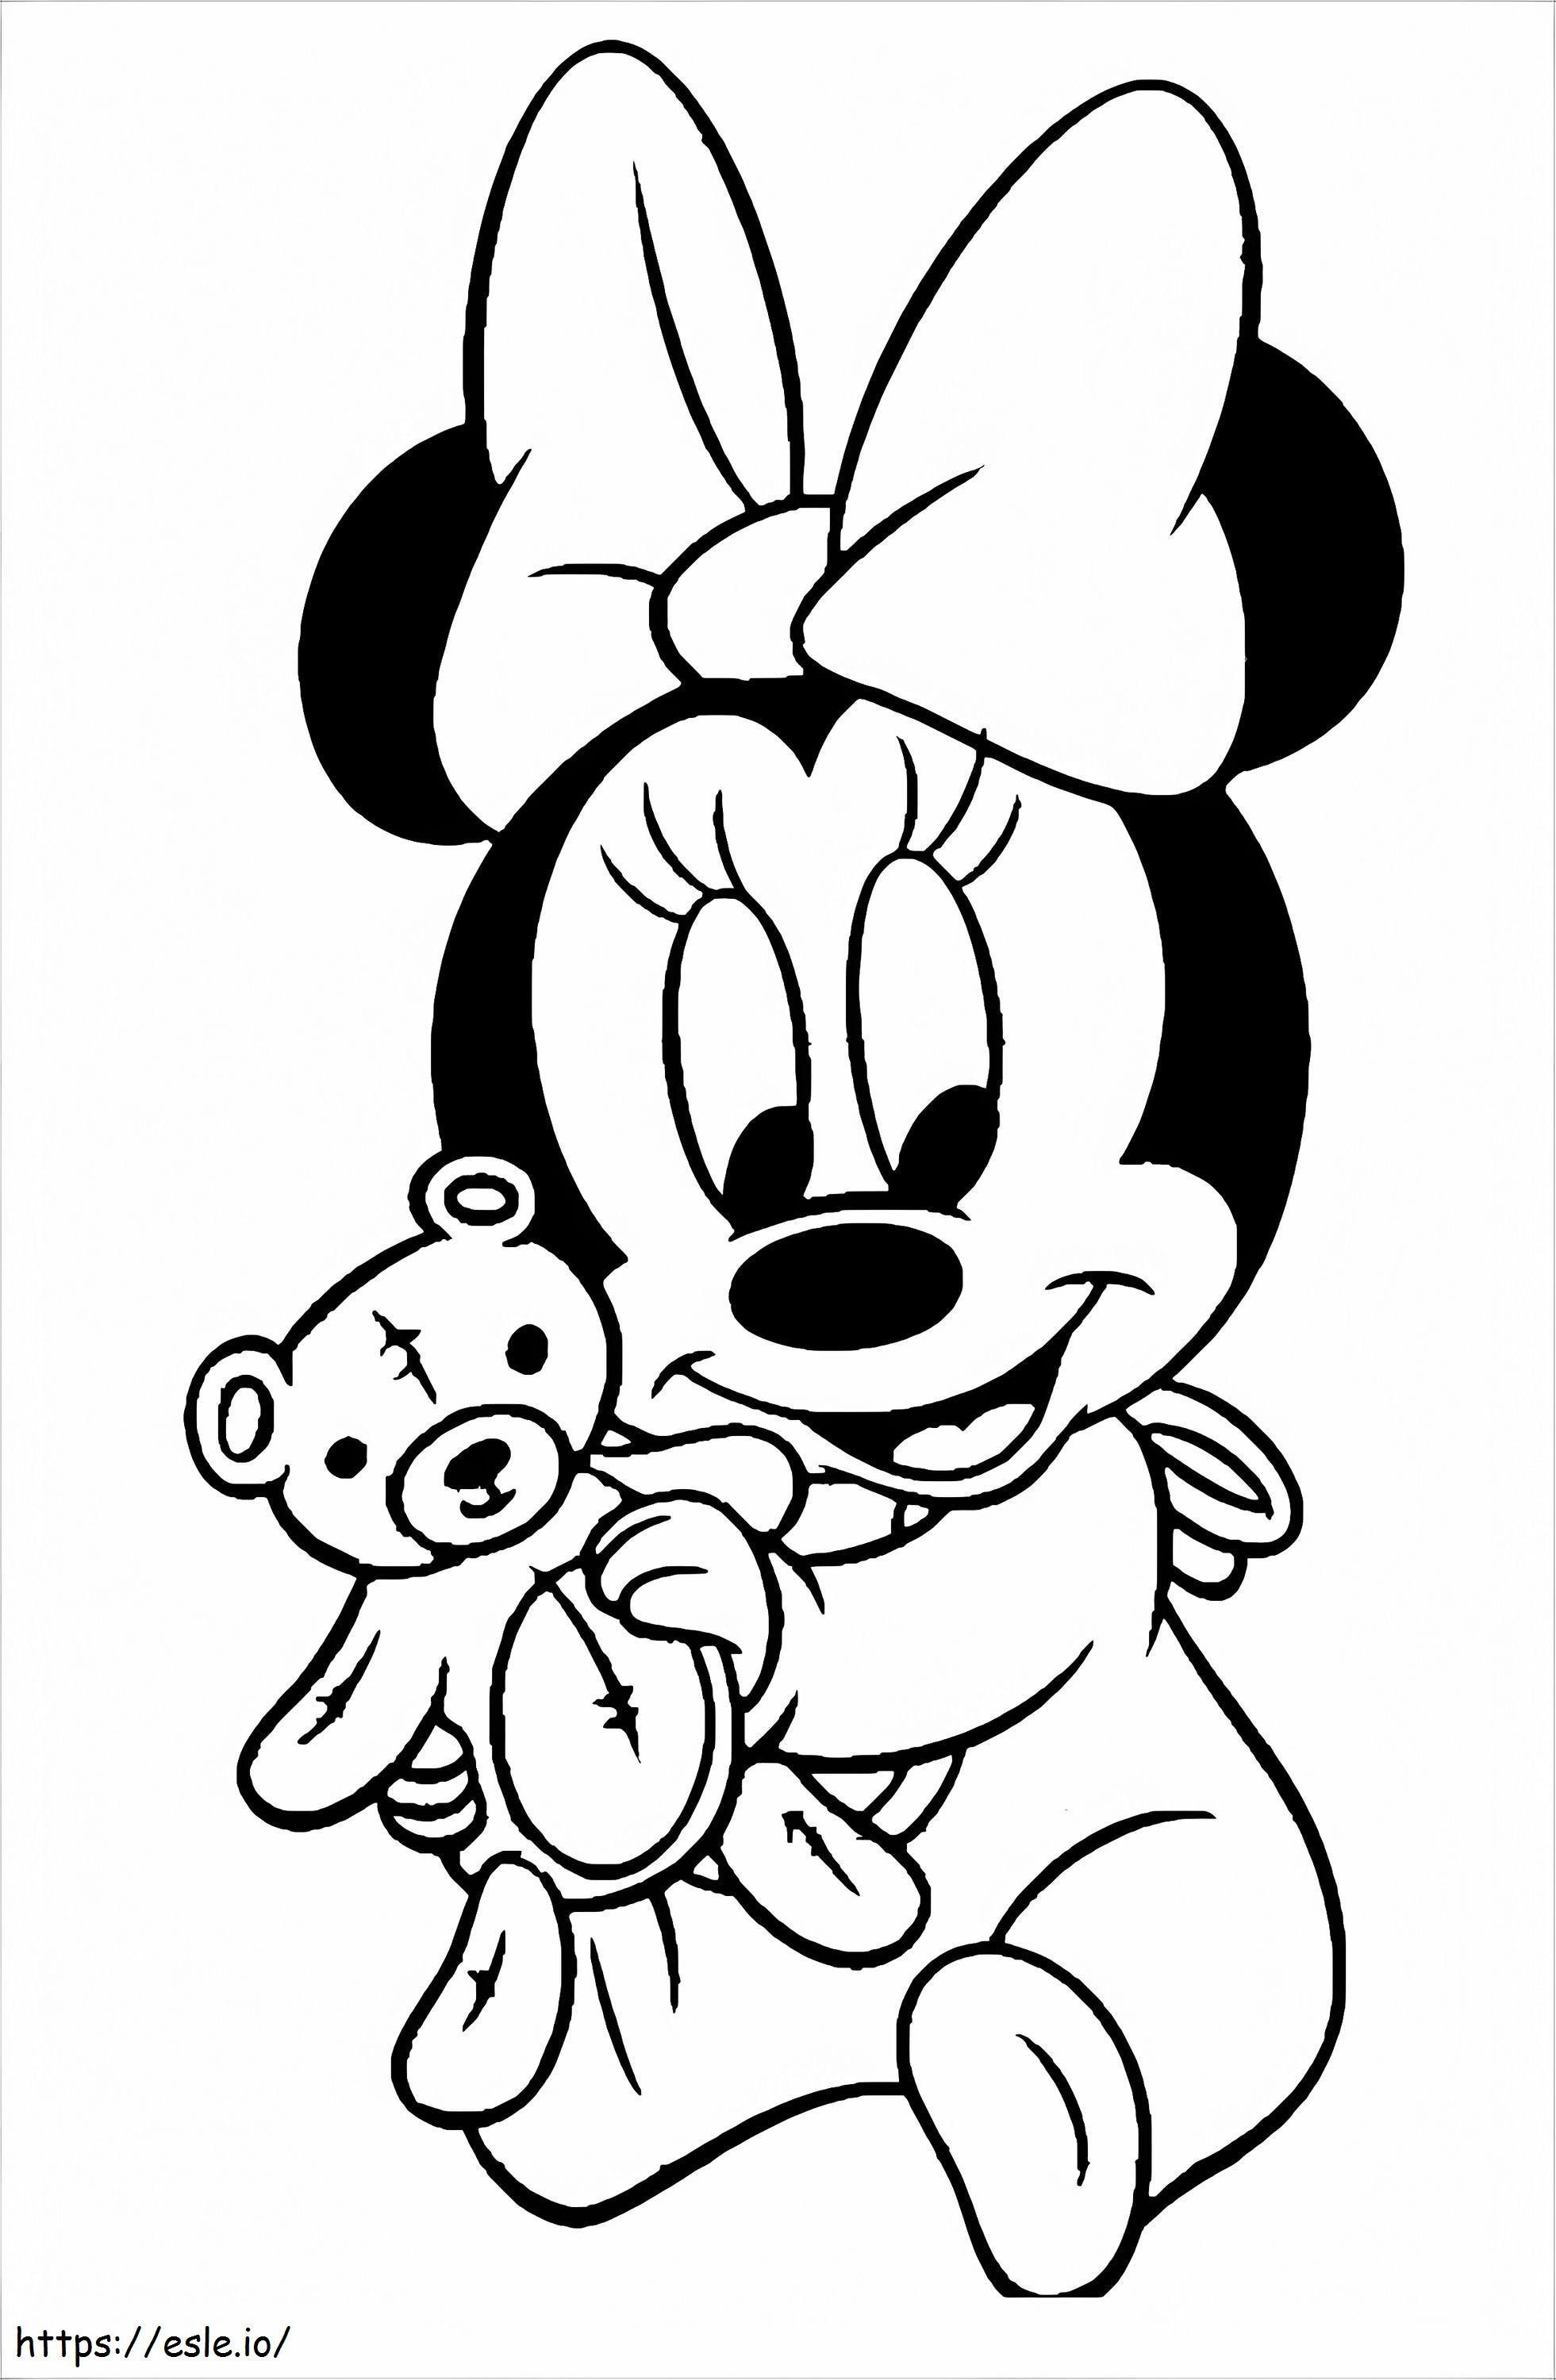 1532138954 Minnie Mouse Con Peluche A4 para colorear